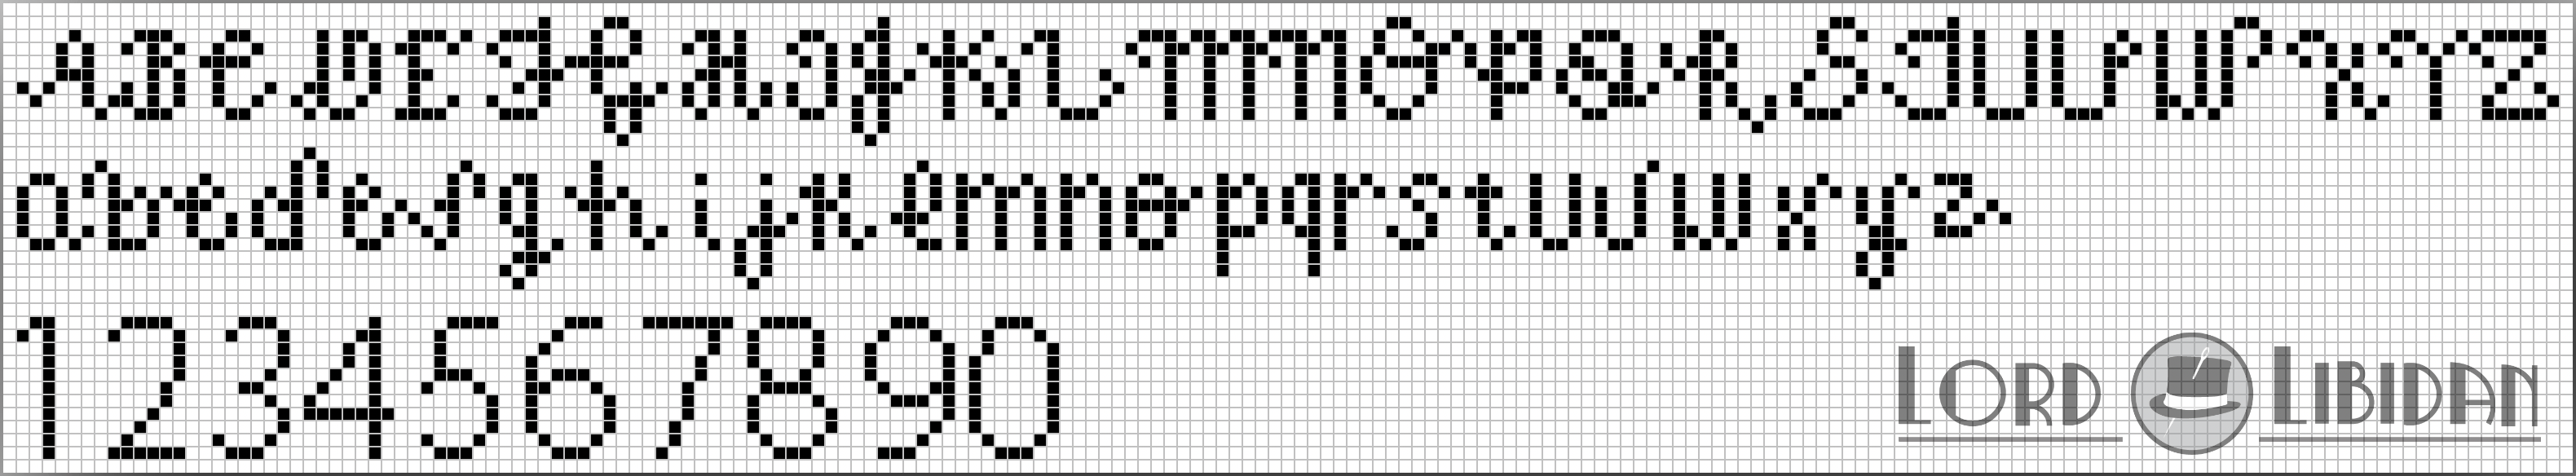 Old Cursive Cross Stitch Alphabet Pattern Free Download by Lord Libidan